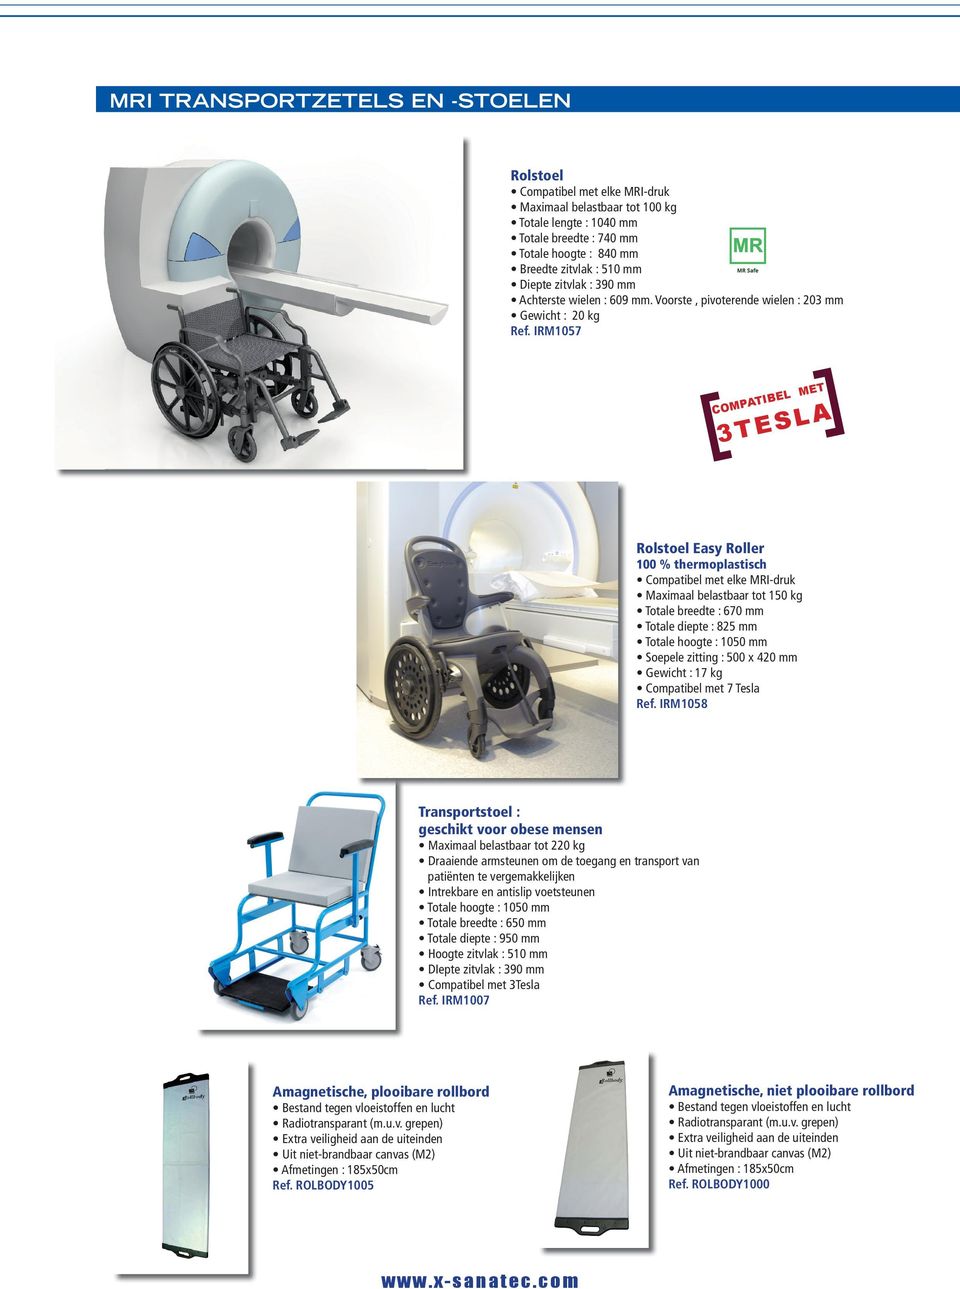 IRM1057 Rolstoel Easy Roller 100 % thermoplastisch Compatibel met elke MRI-druk Maximaal belastbaar tot 150 kg Totale breedte : 670 mm Totale diepte : 825 mm Totale hoogte : 1050 mm Soepele zitting :